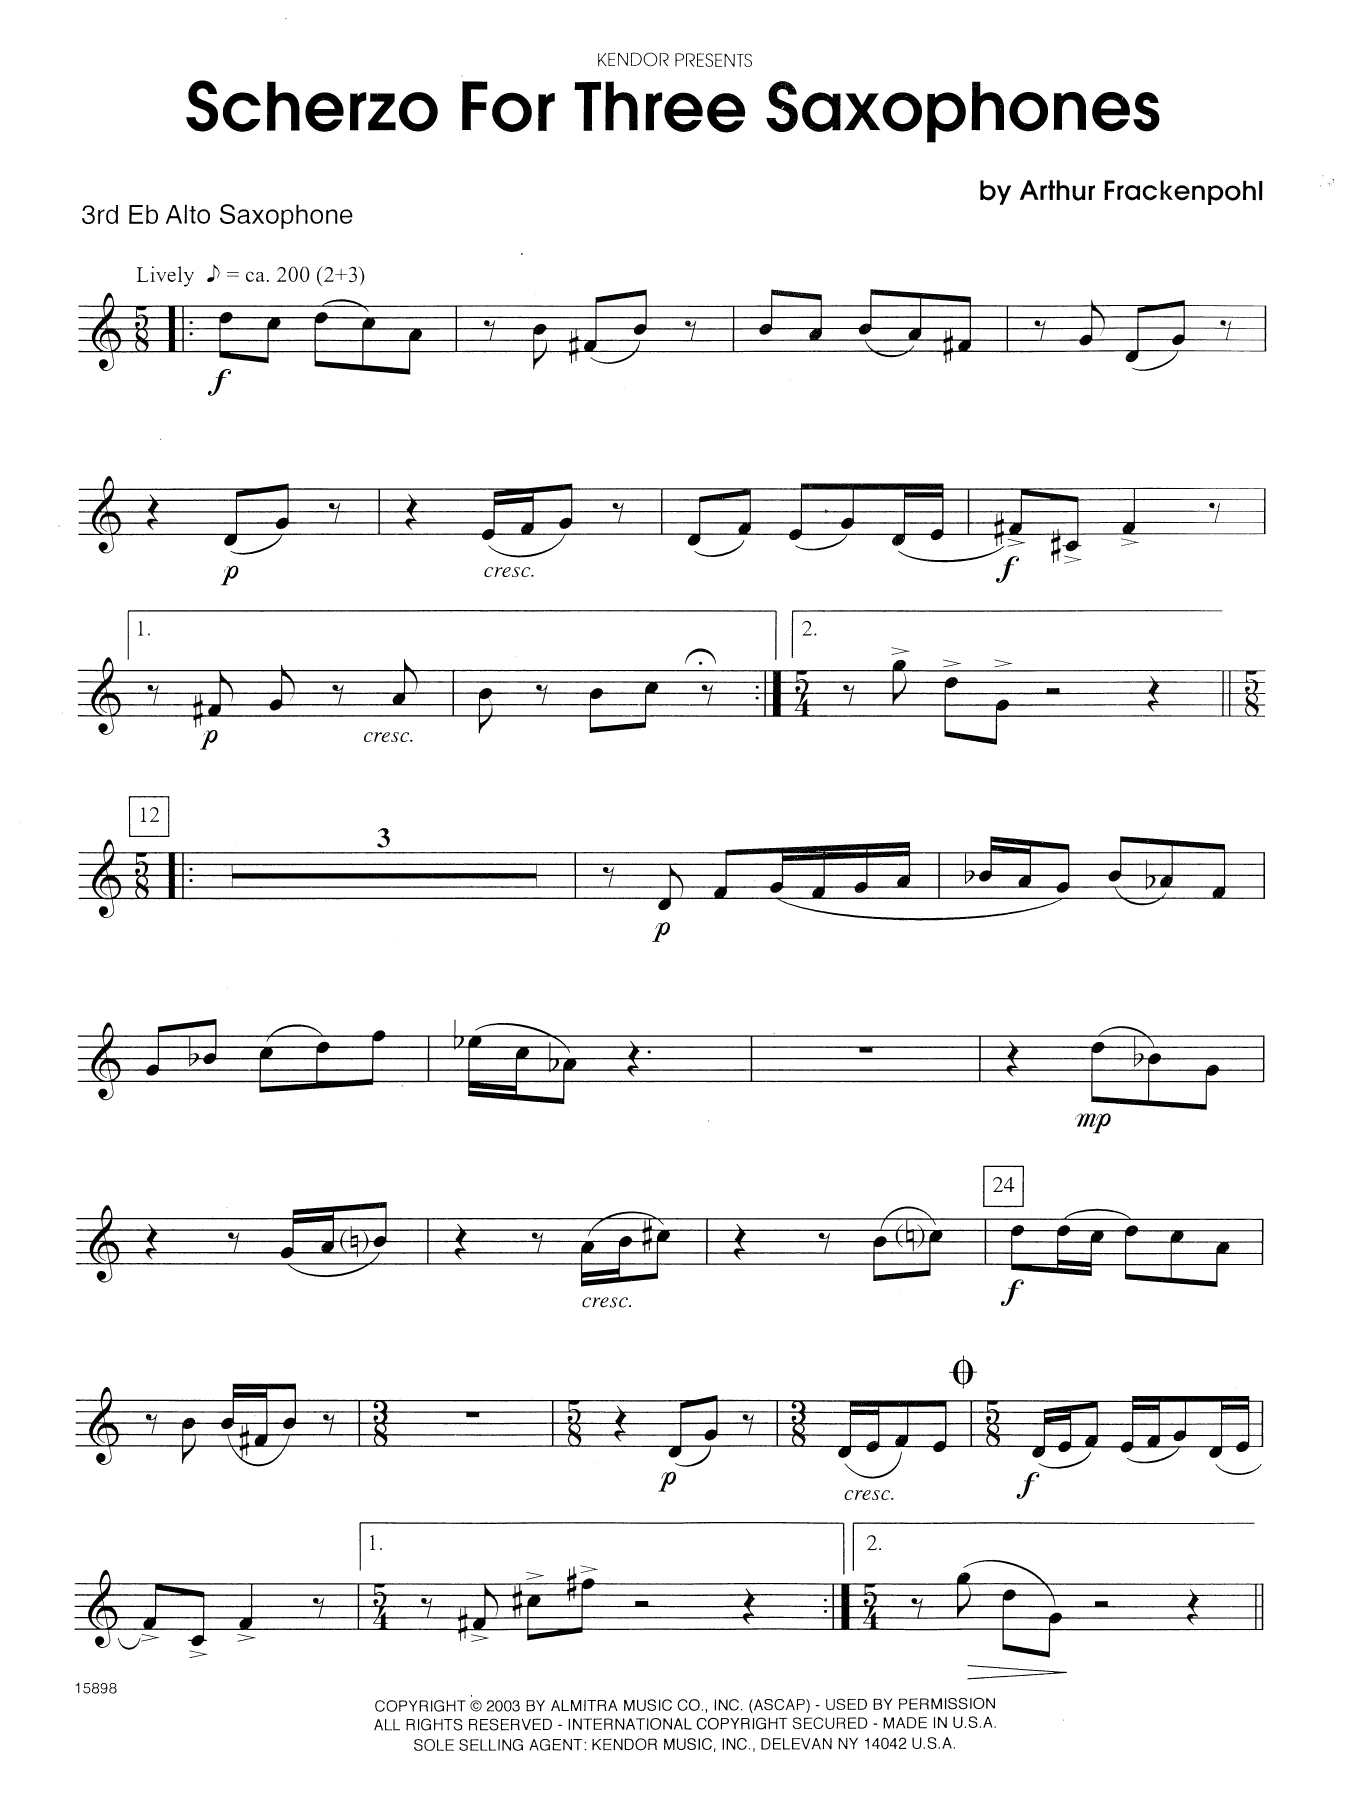 Download Arthur Frackenpohl Scherzo For Three Saxophones - 3rd Eb A Sheet Music